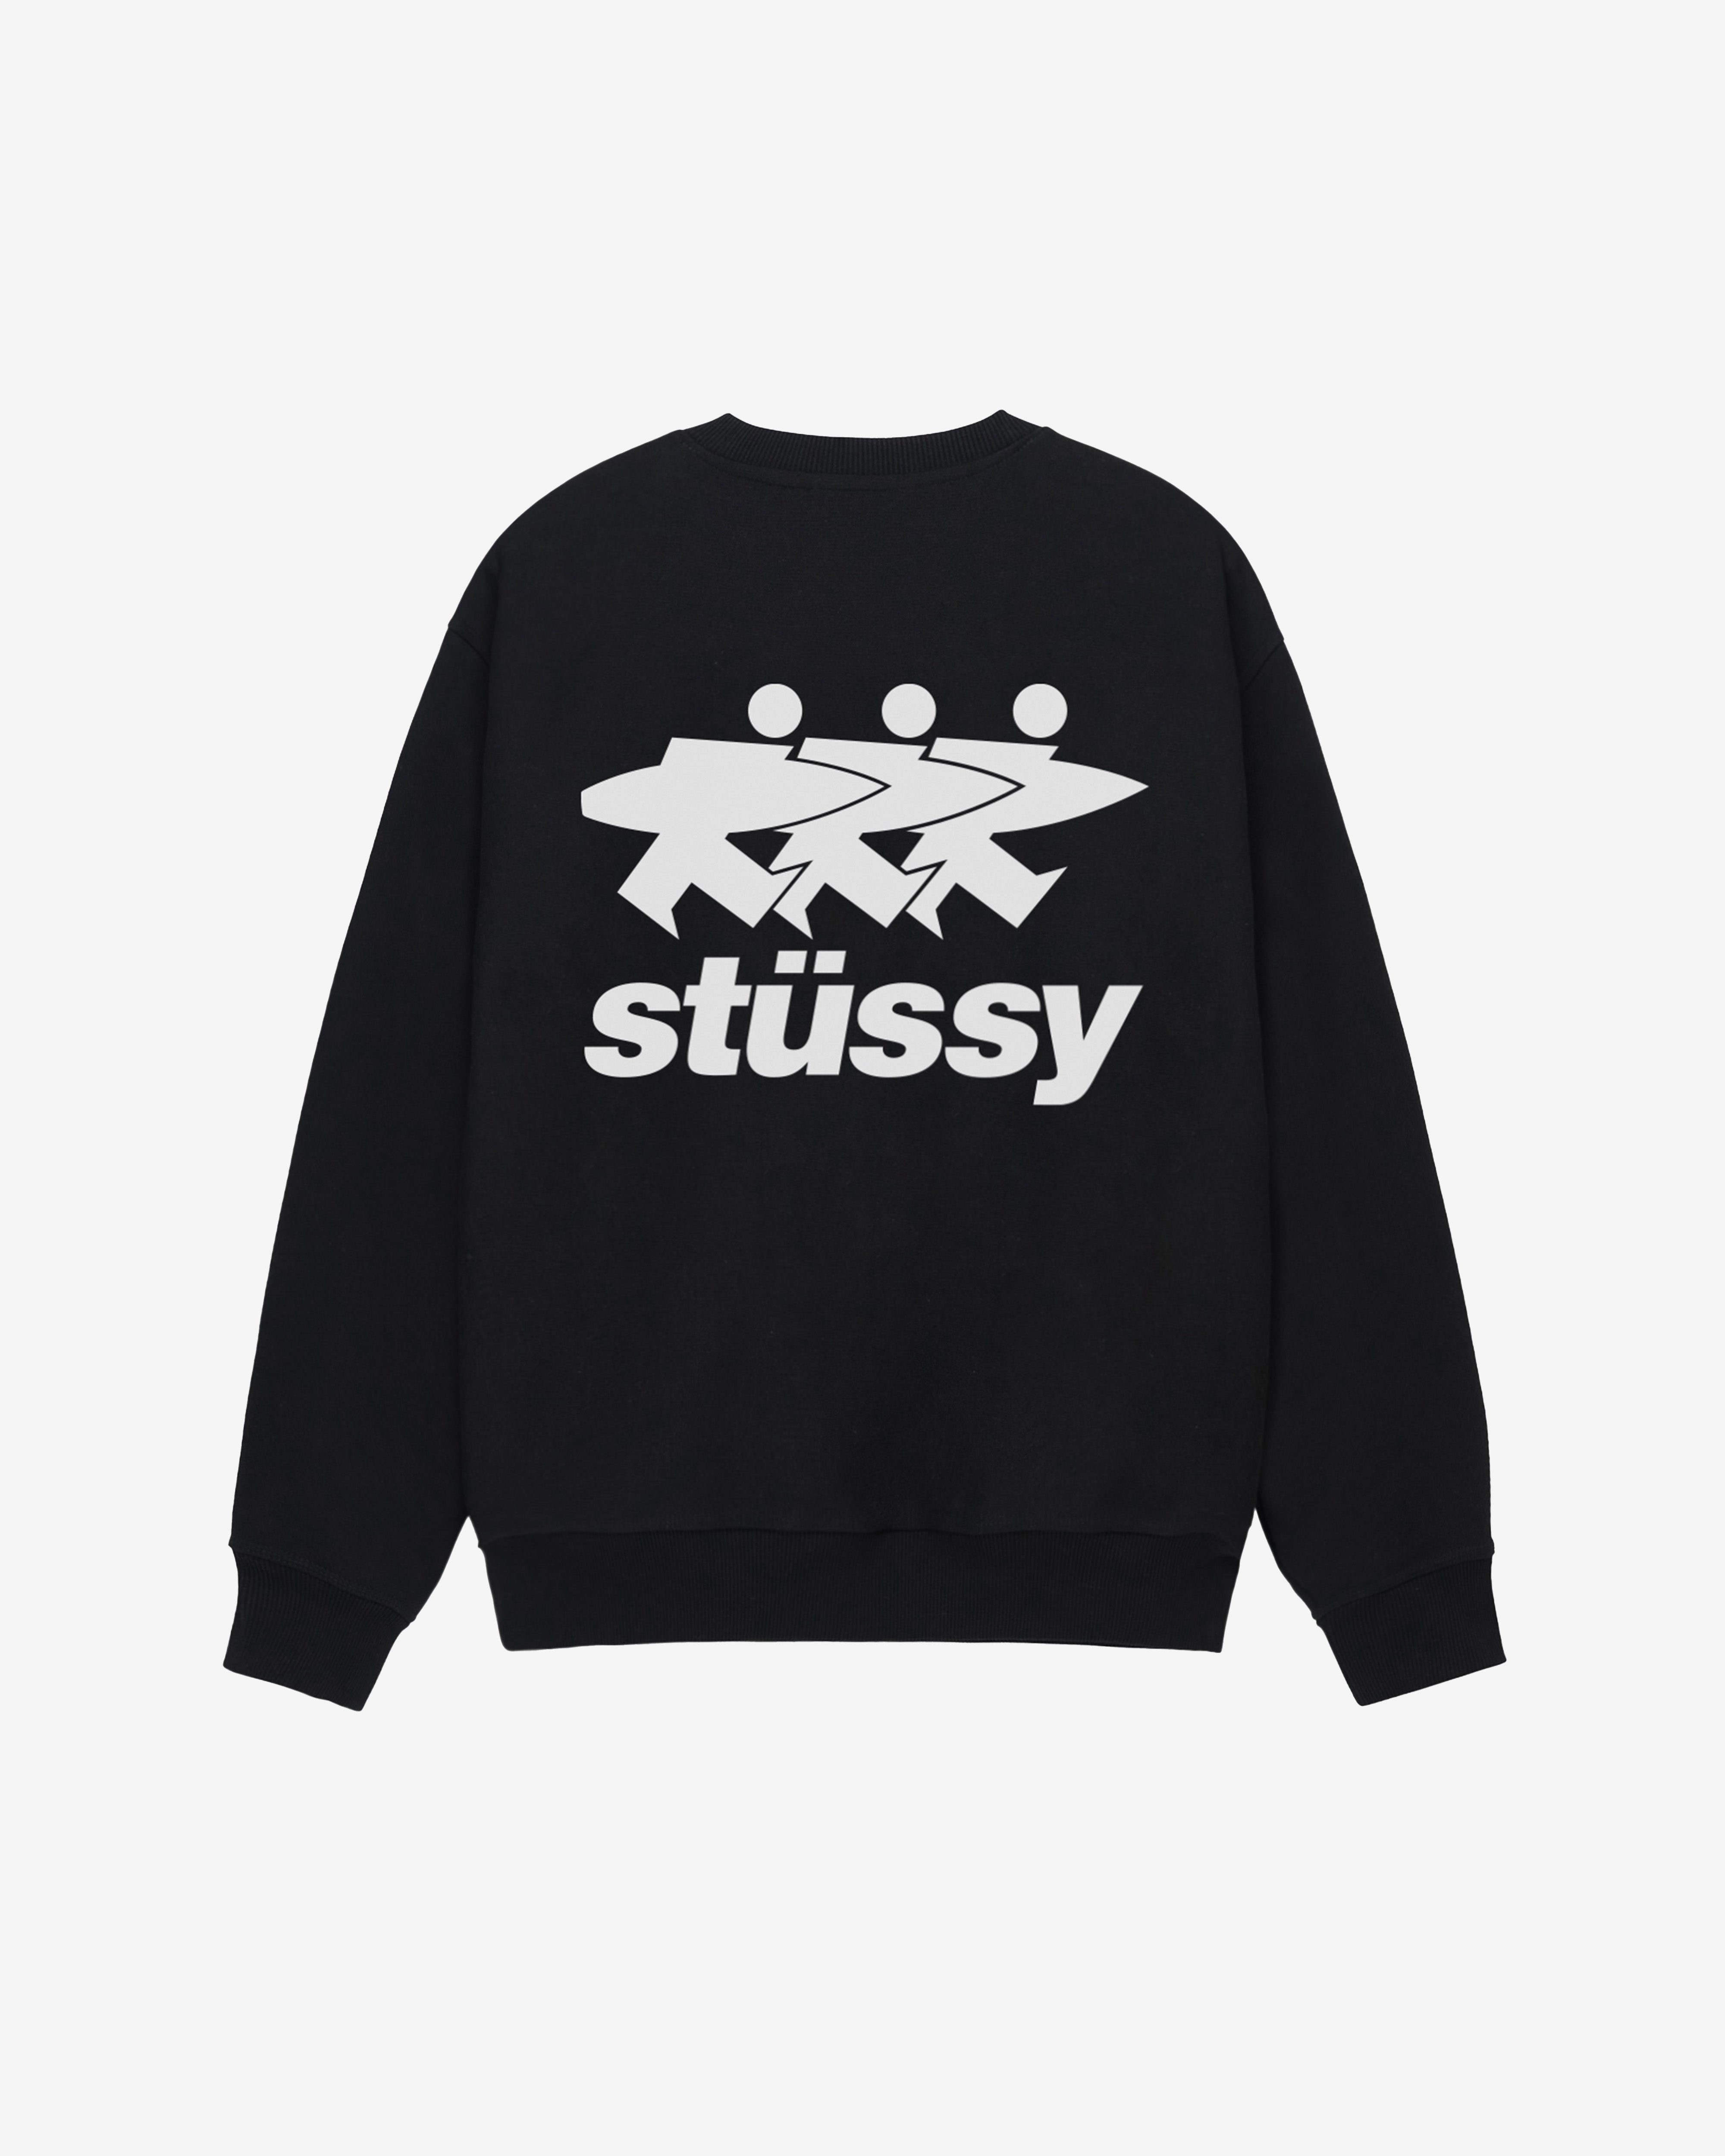 Stüssy - Men's Surfwalk Crew - (Black) – DSMNY E-SHOP